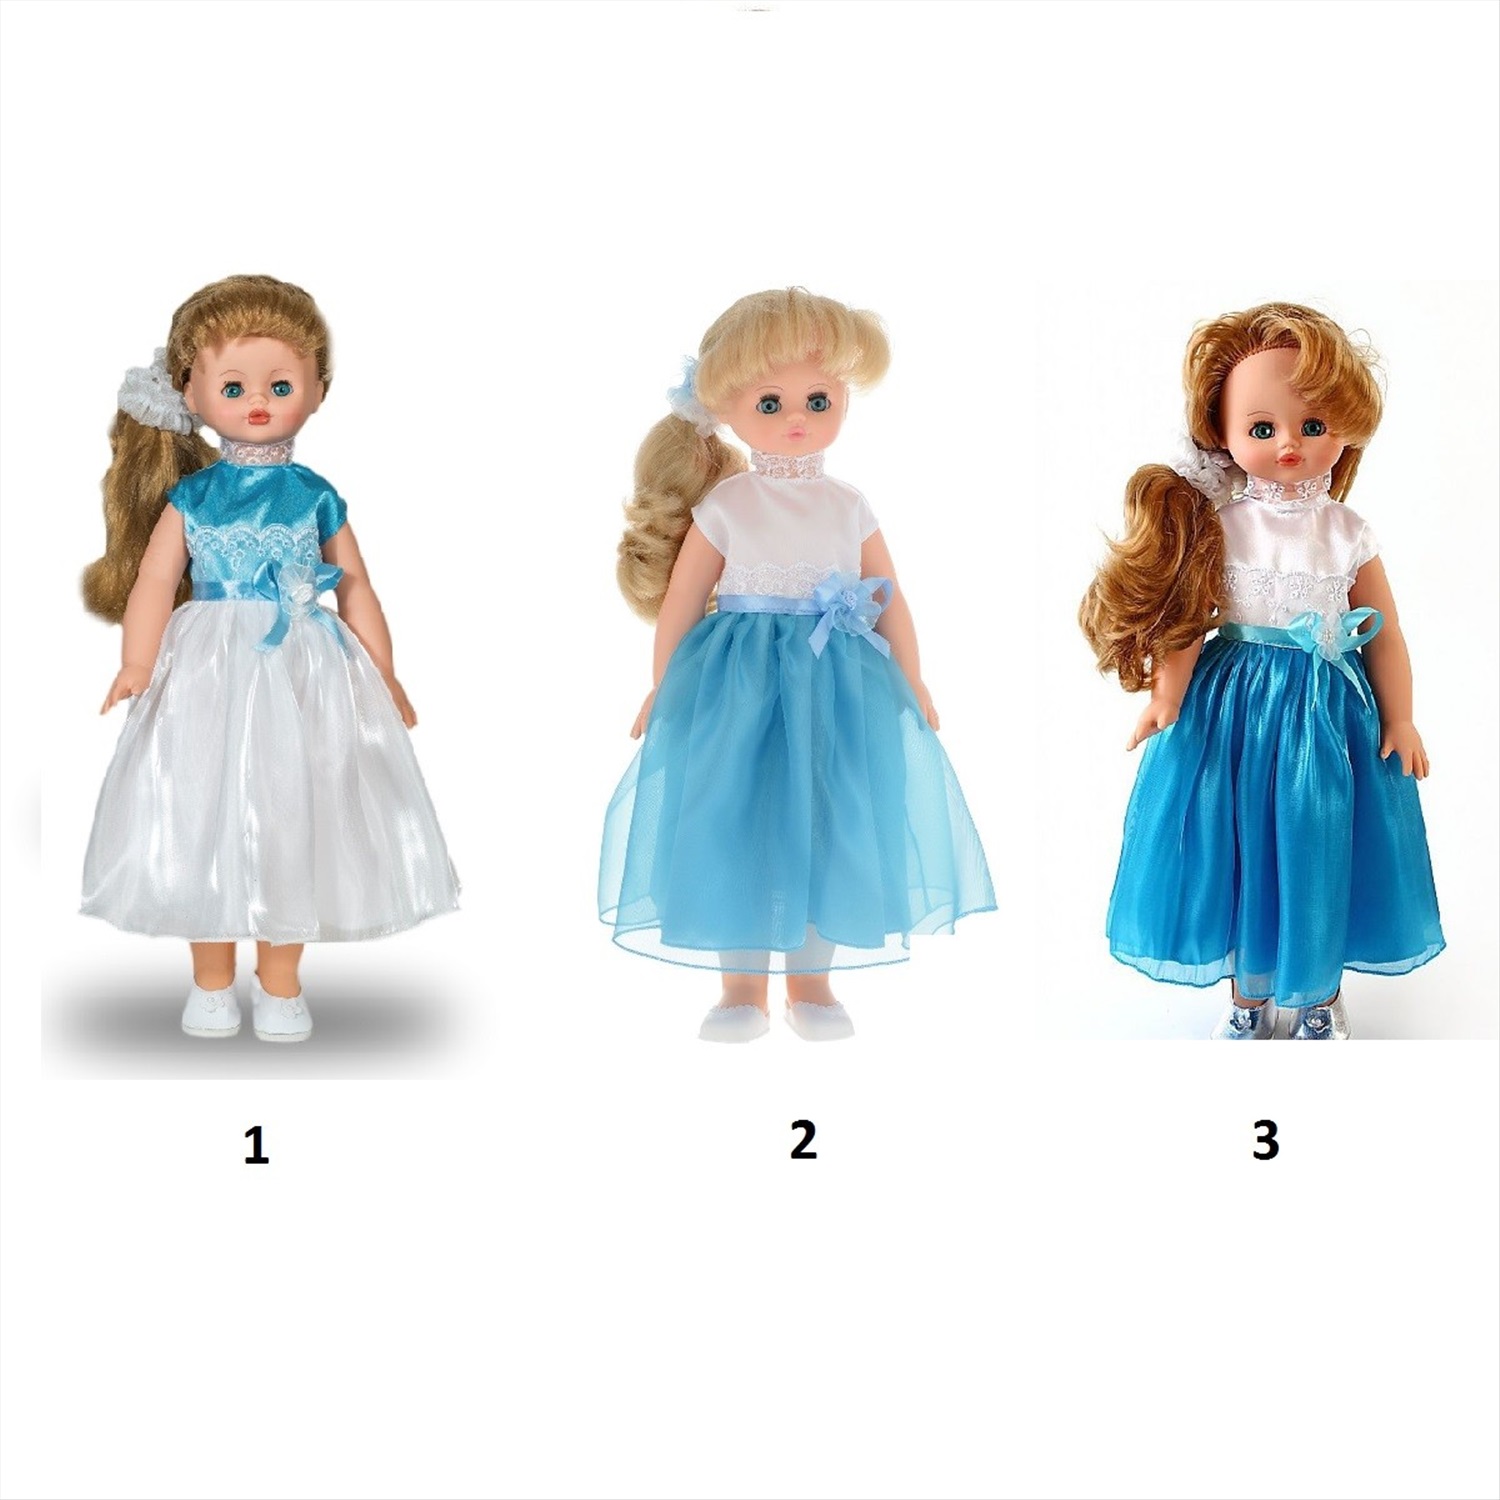 Алиса как будет 16 коробок. Кукла Алиса 16 озвуч. (Уп 4). Кукла Алиса 16 звук, 55 см. В2456/о кукла Алиса 16 со звуком.